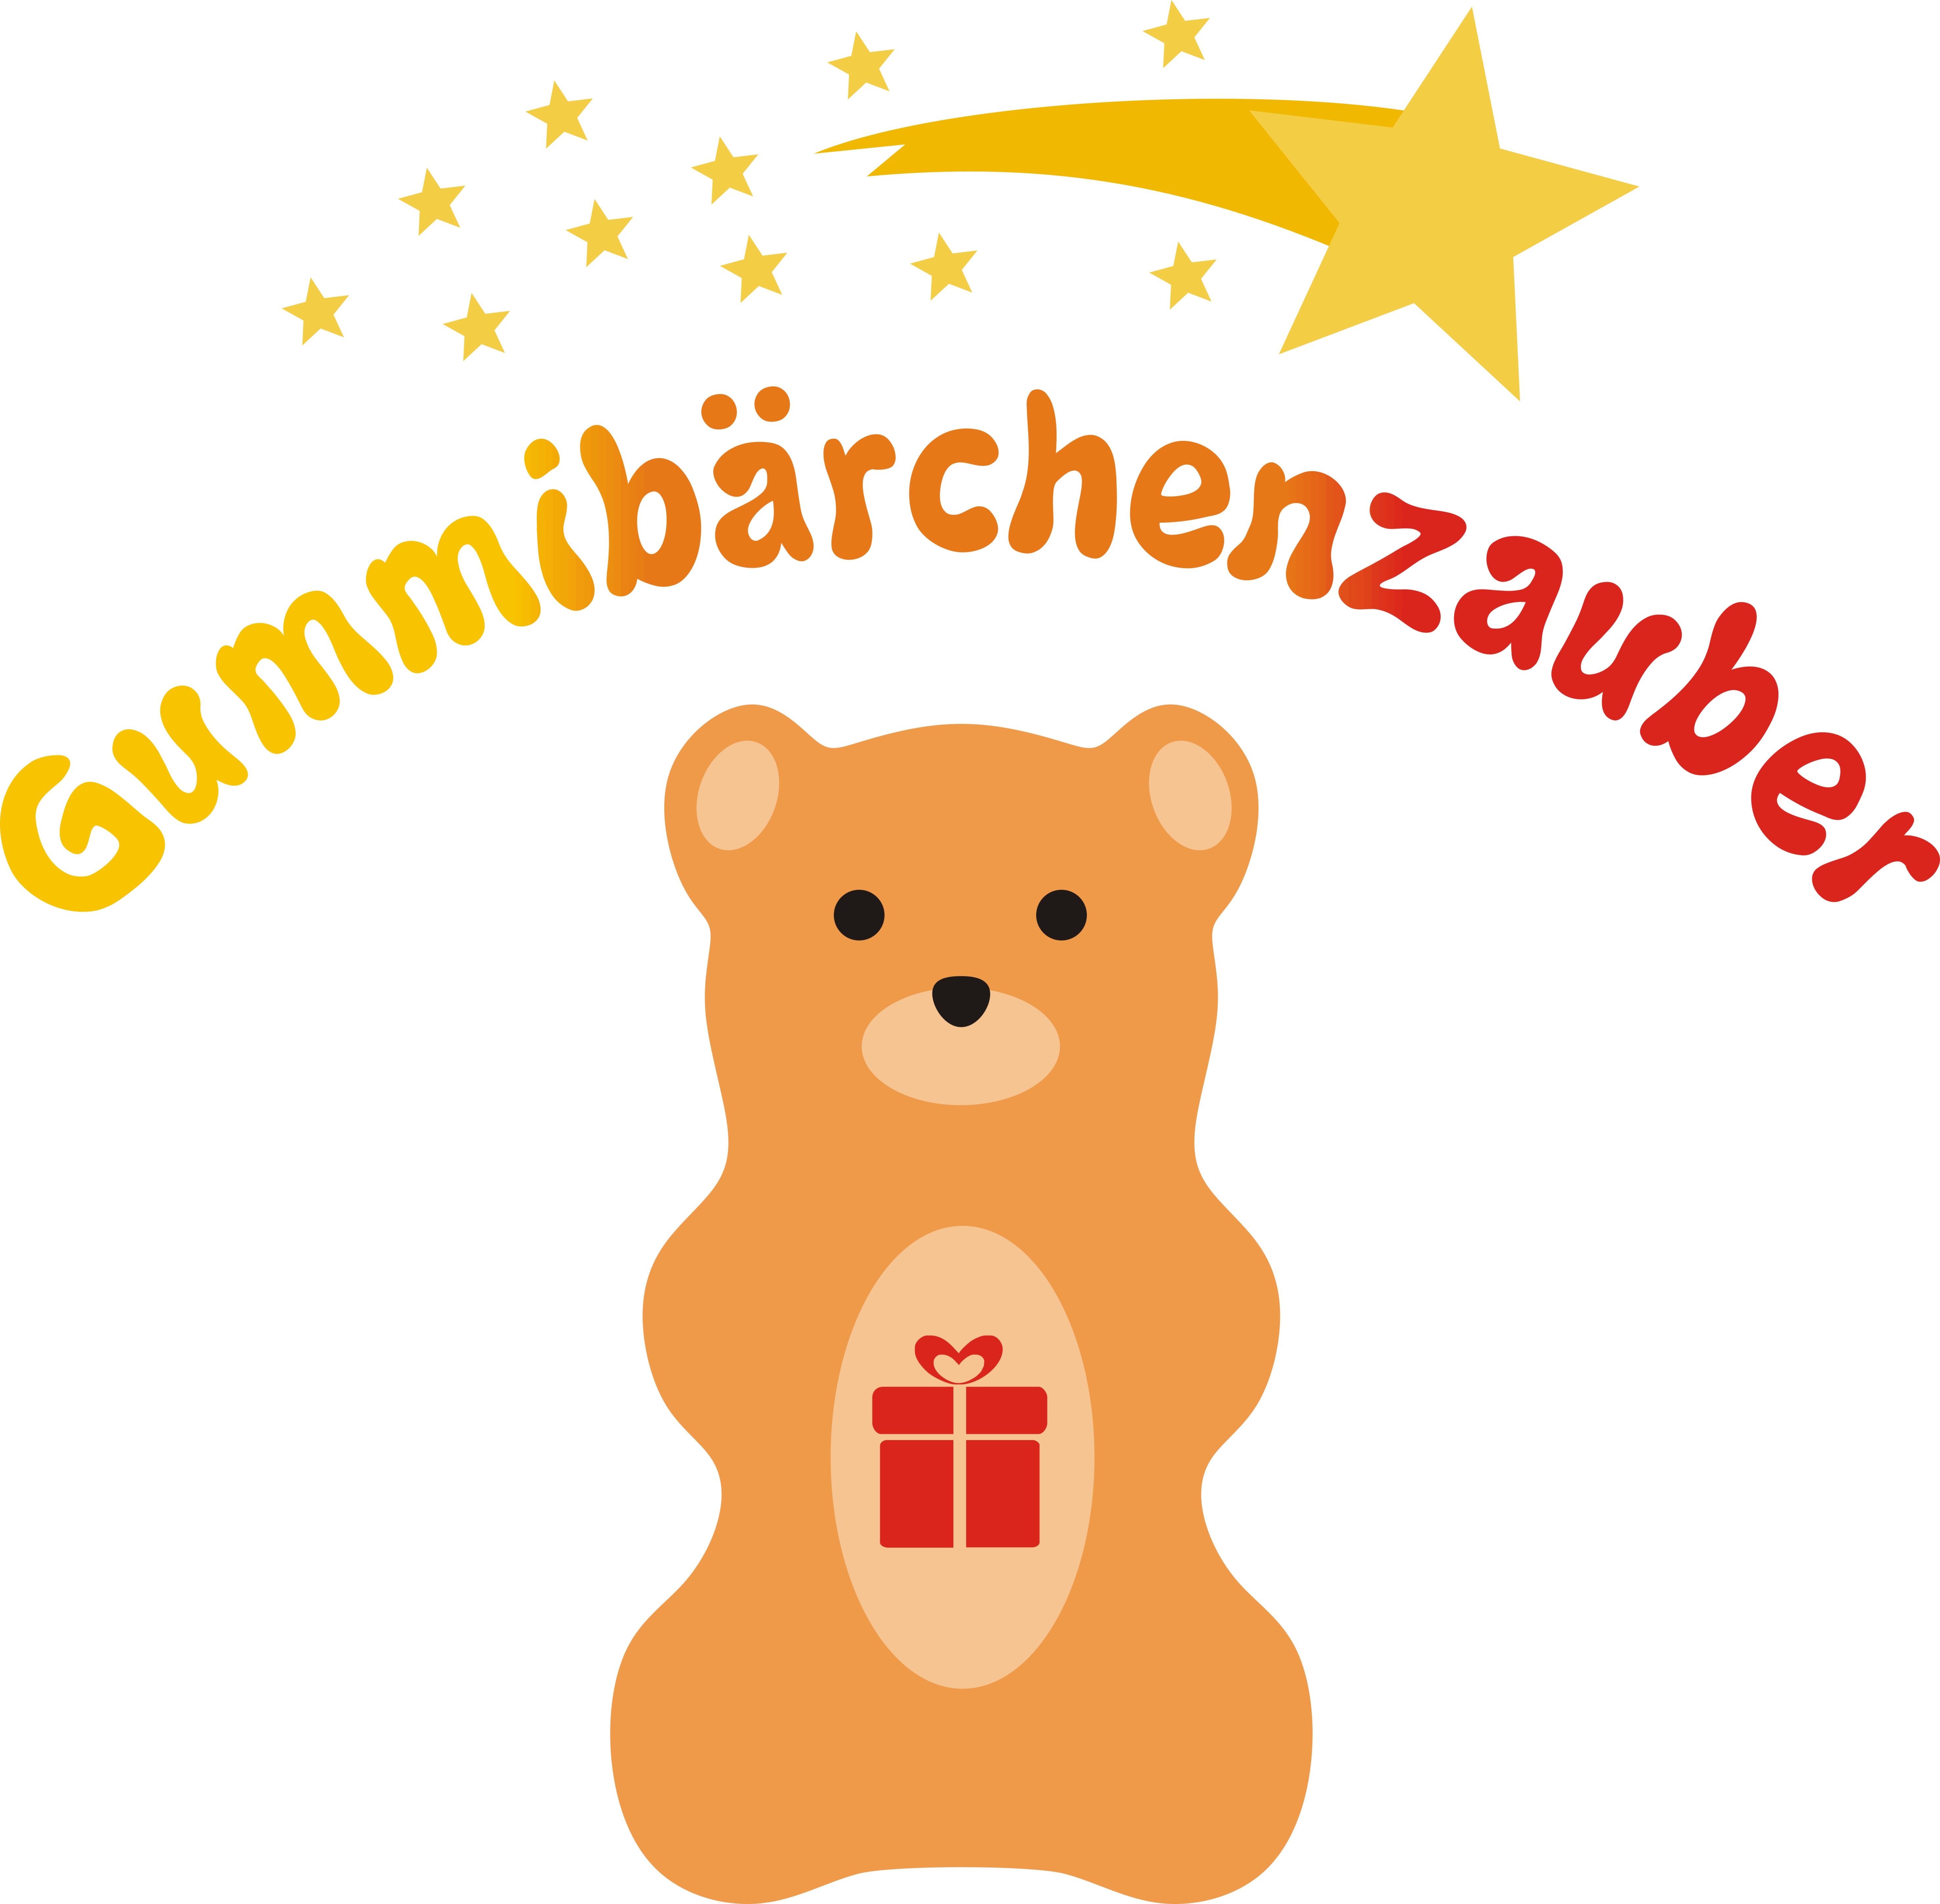 gummibarchenzauber logo logo